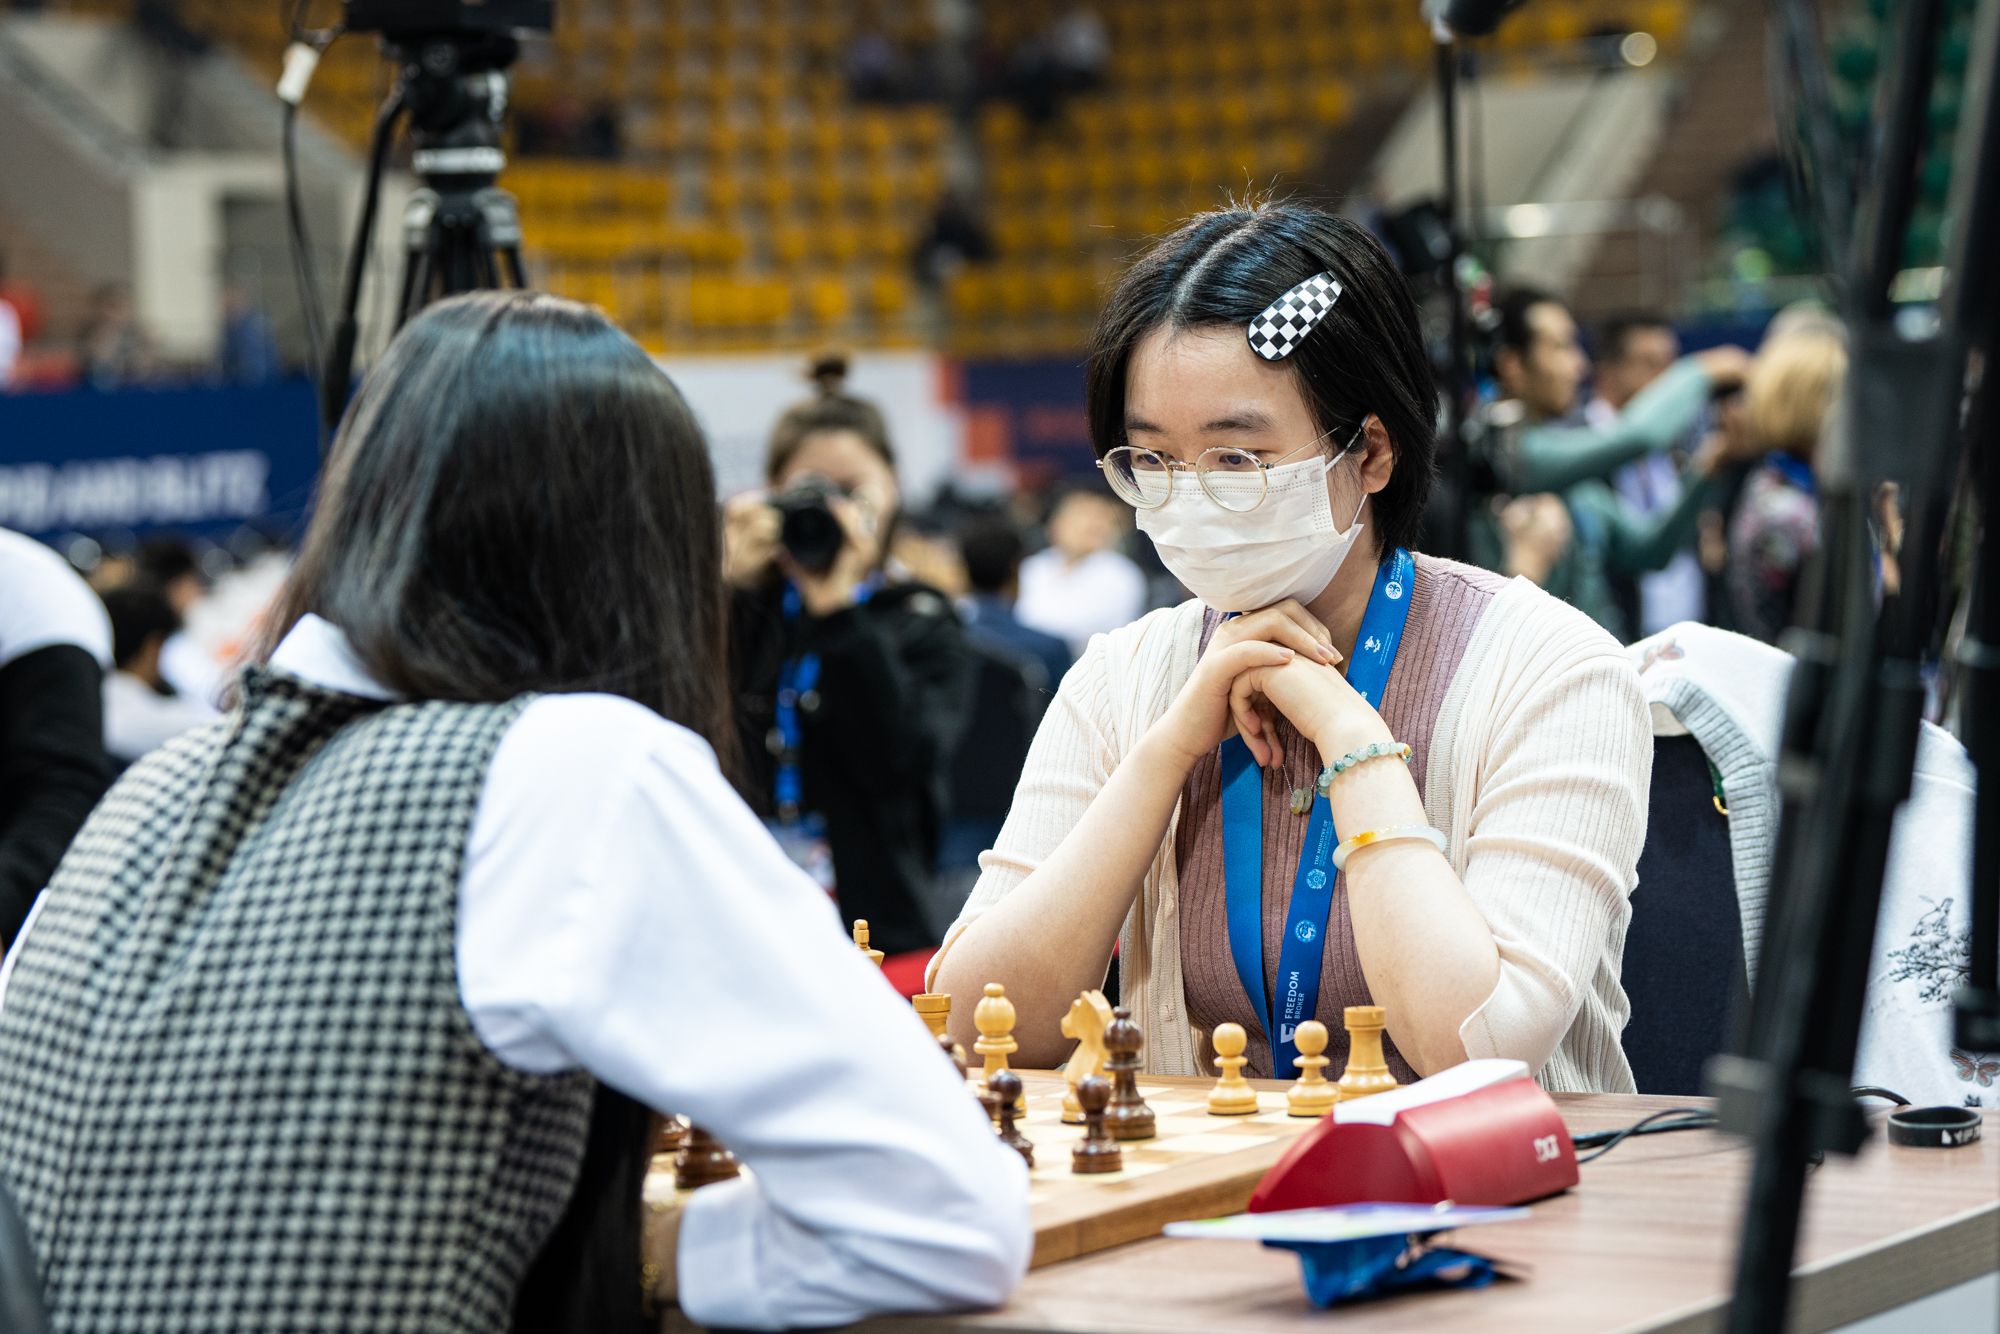 Rapid Chess Championship 2022 do : Informações completas